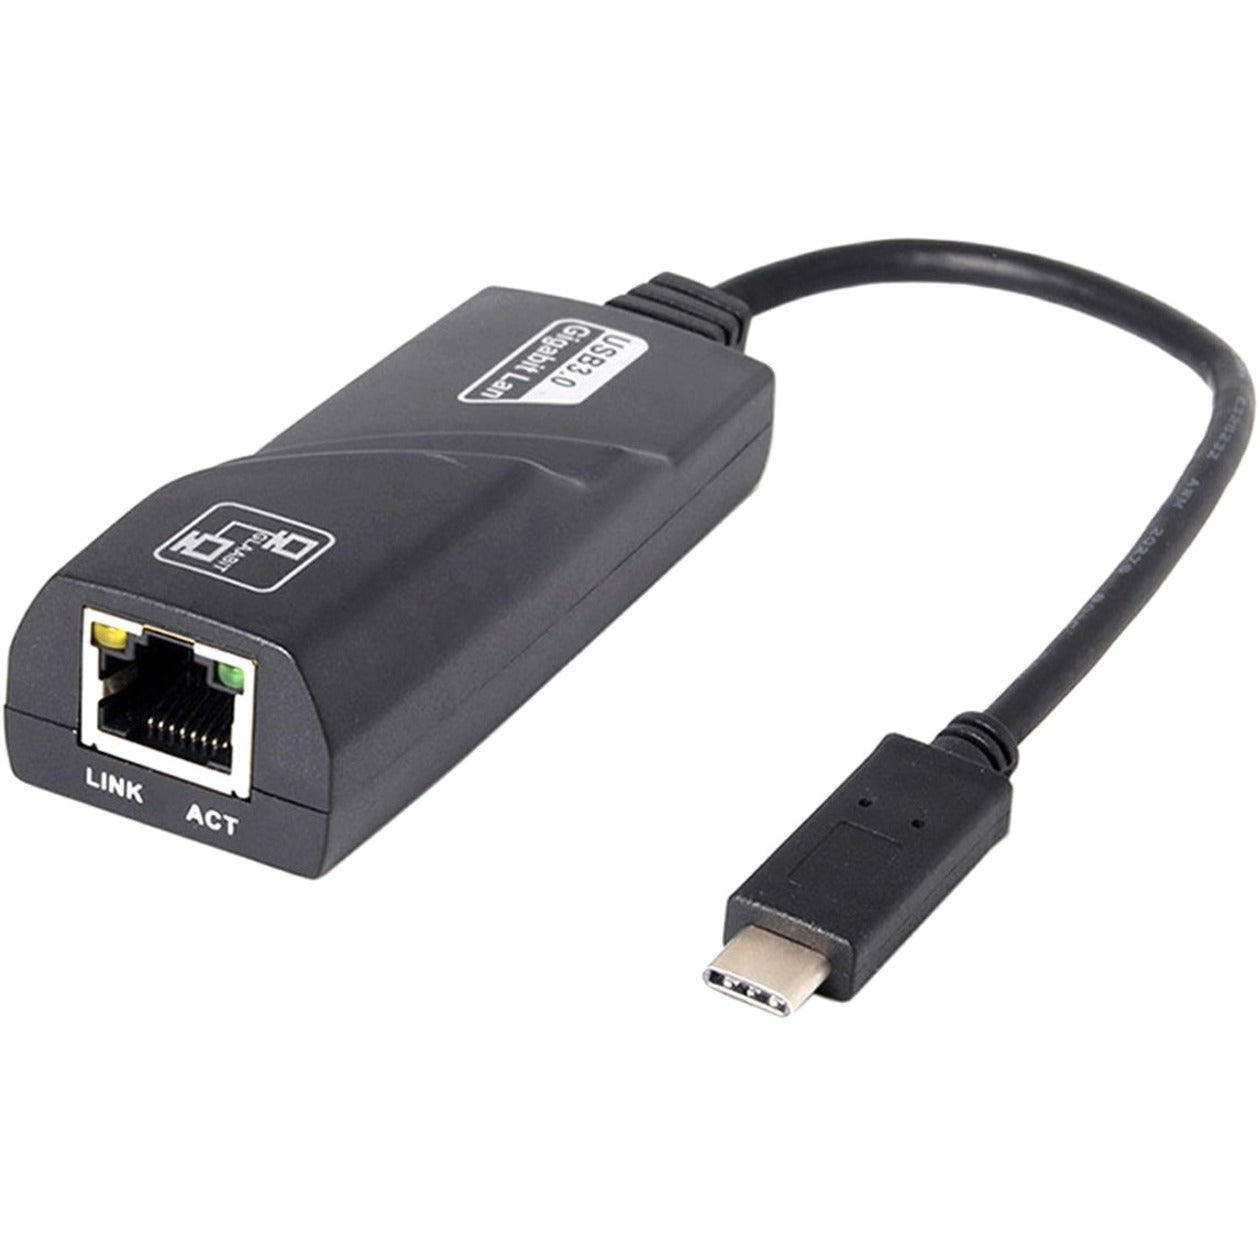 4XEM 4XUSBCGIGABIT USB-C to Gigabit Adapter, High-Speed Ethernet Connection